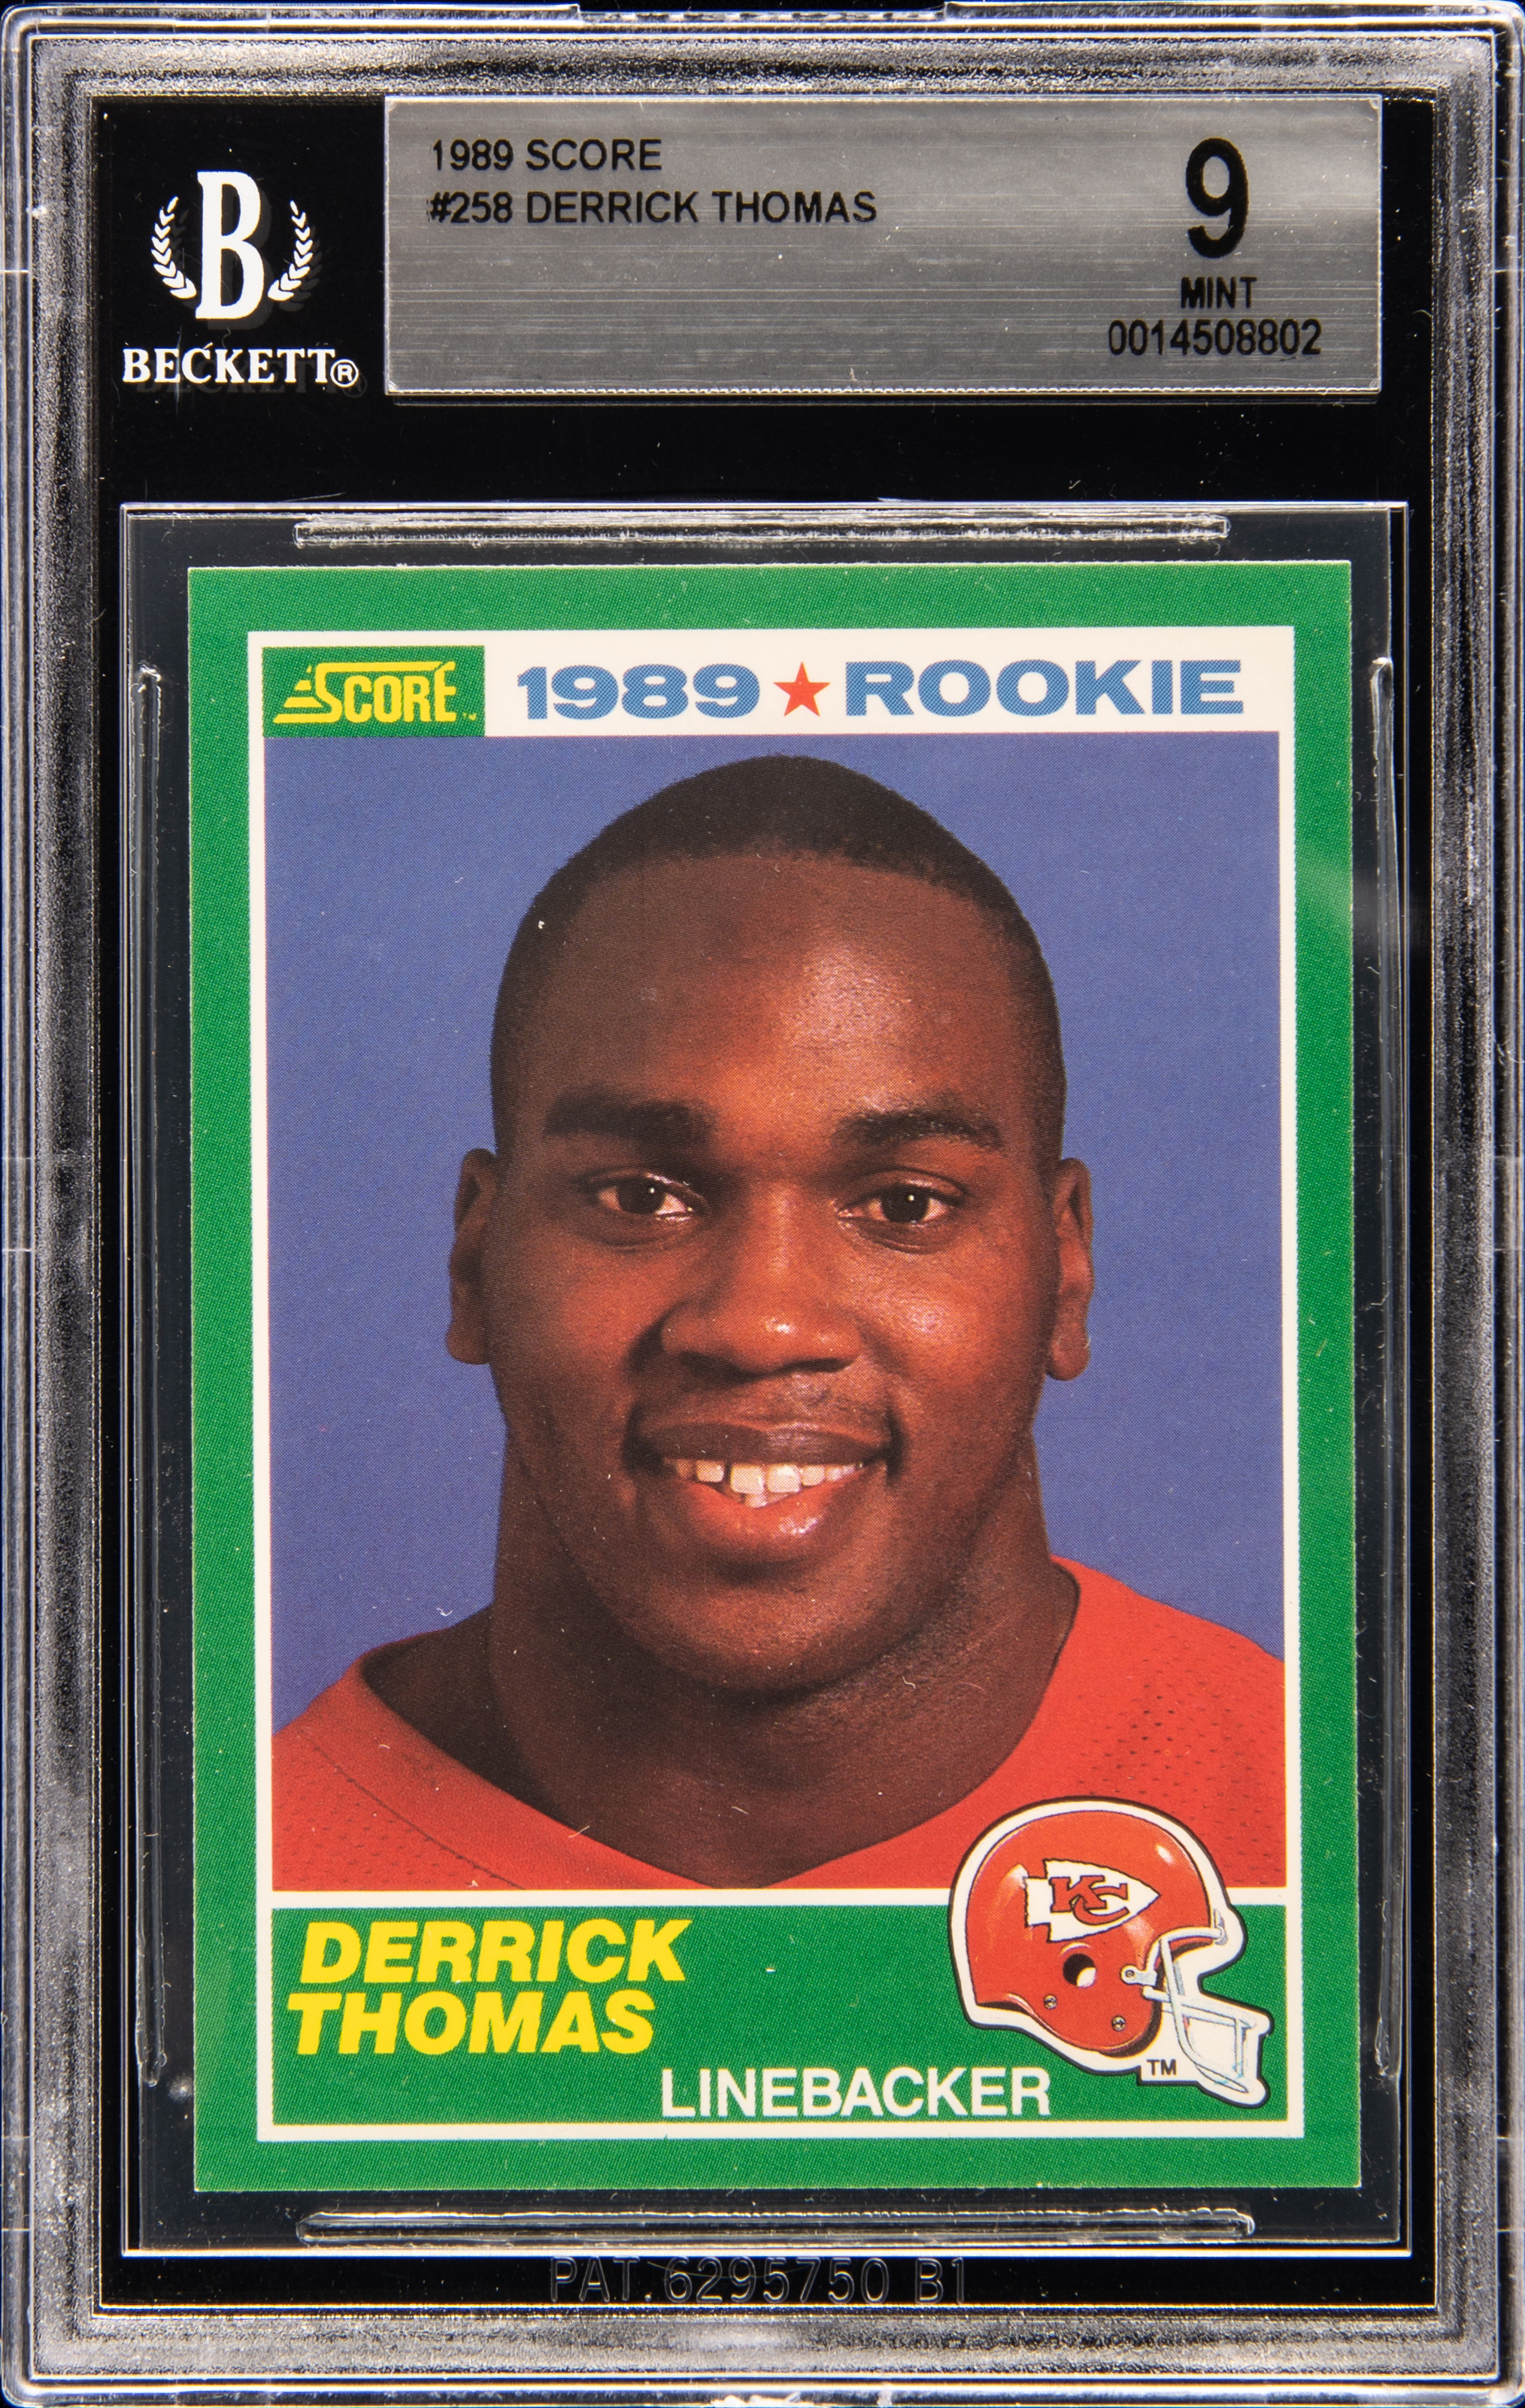 1989 Score Rookie Card #258 Derrick Thomas – BGS MINT 9